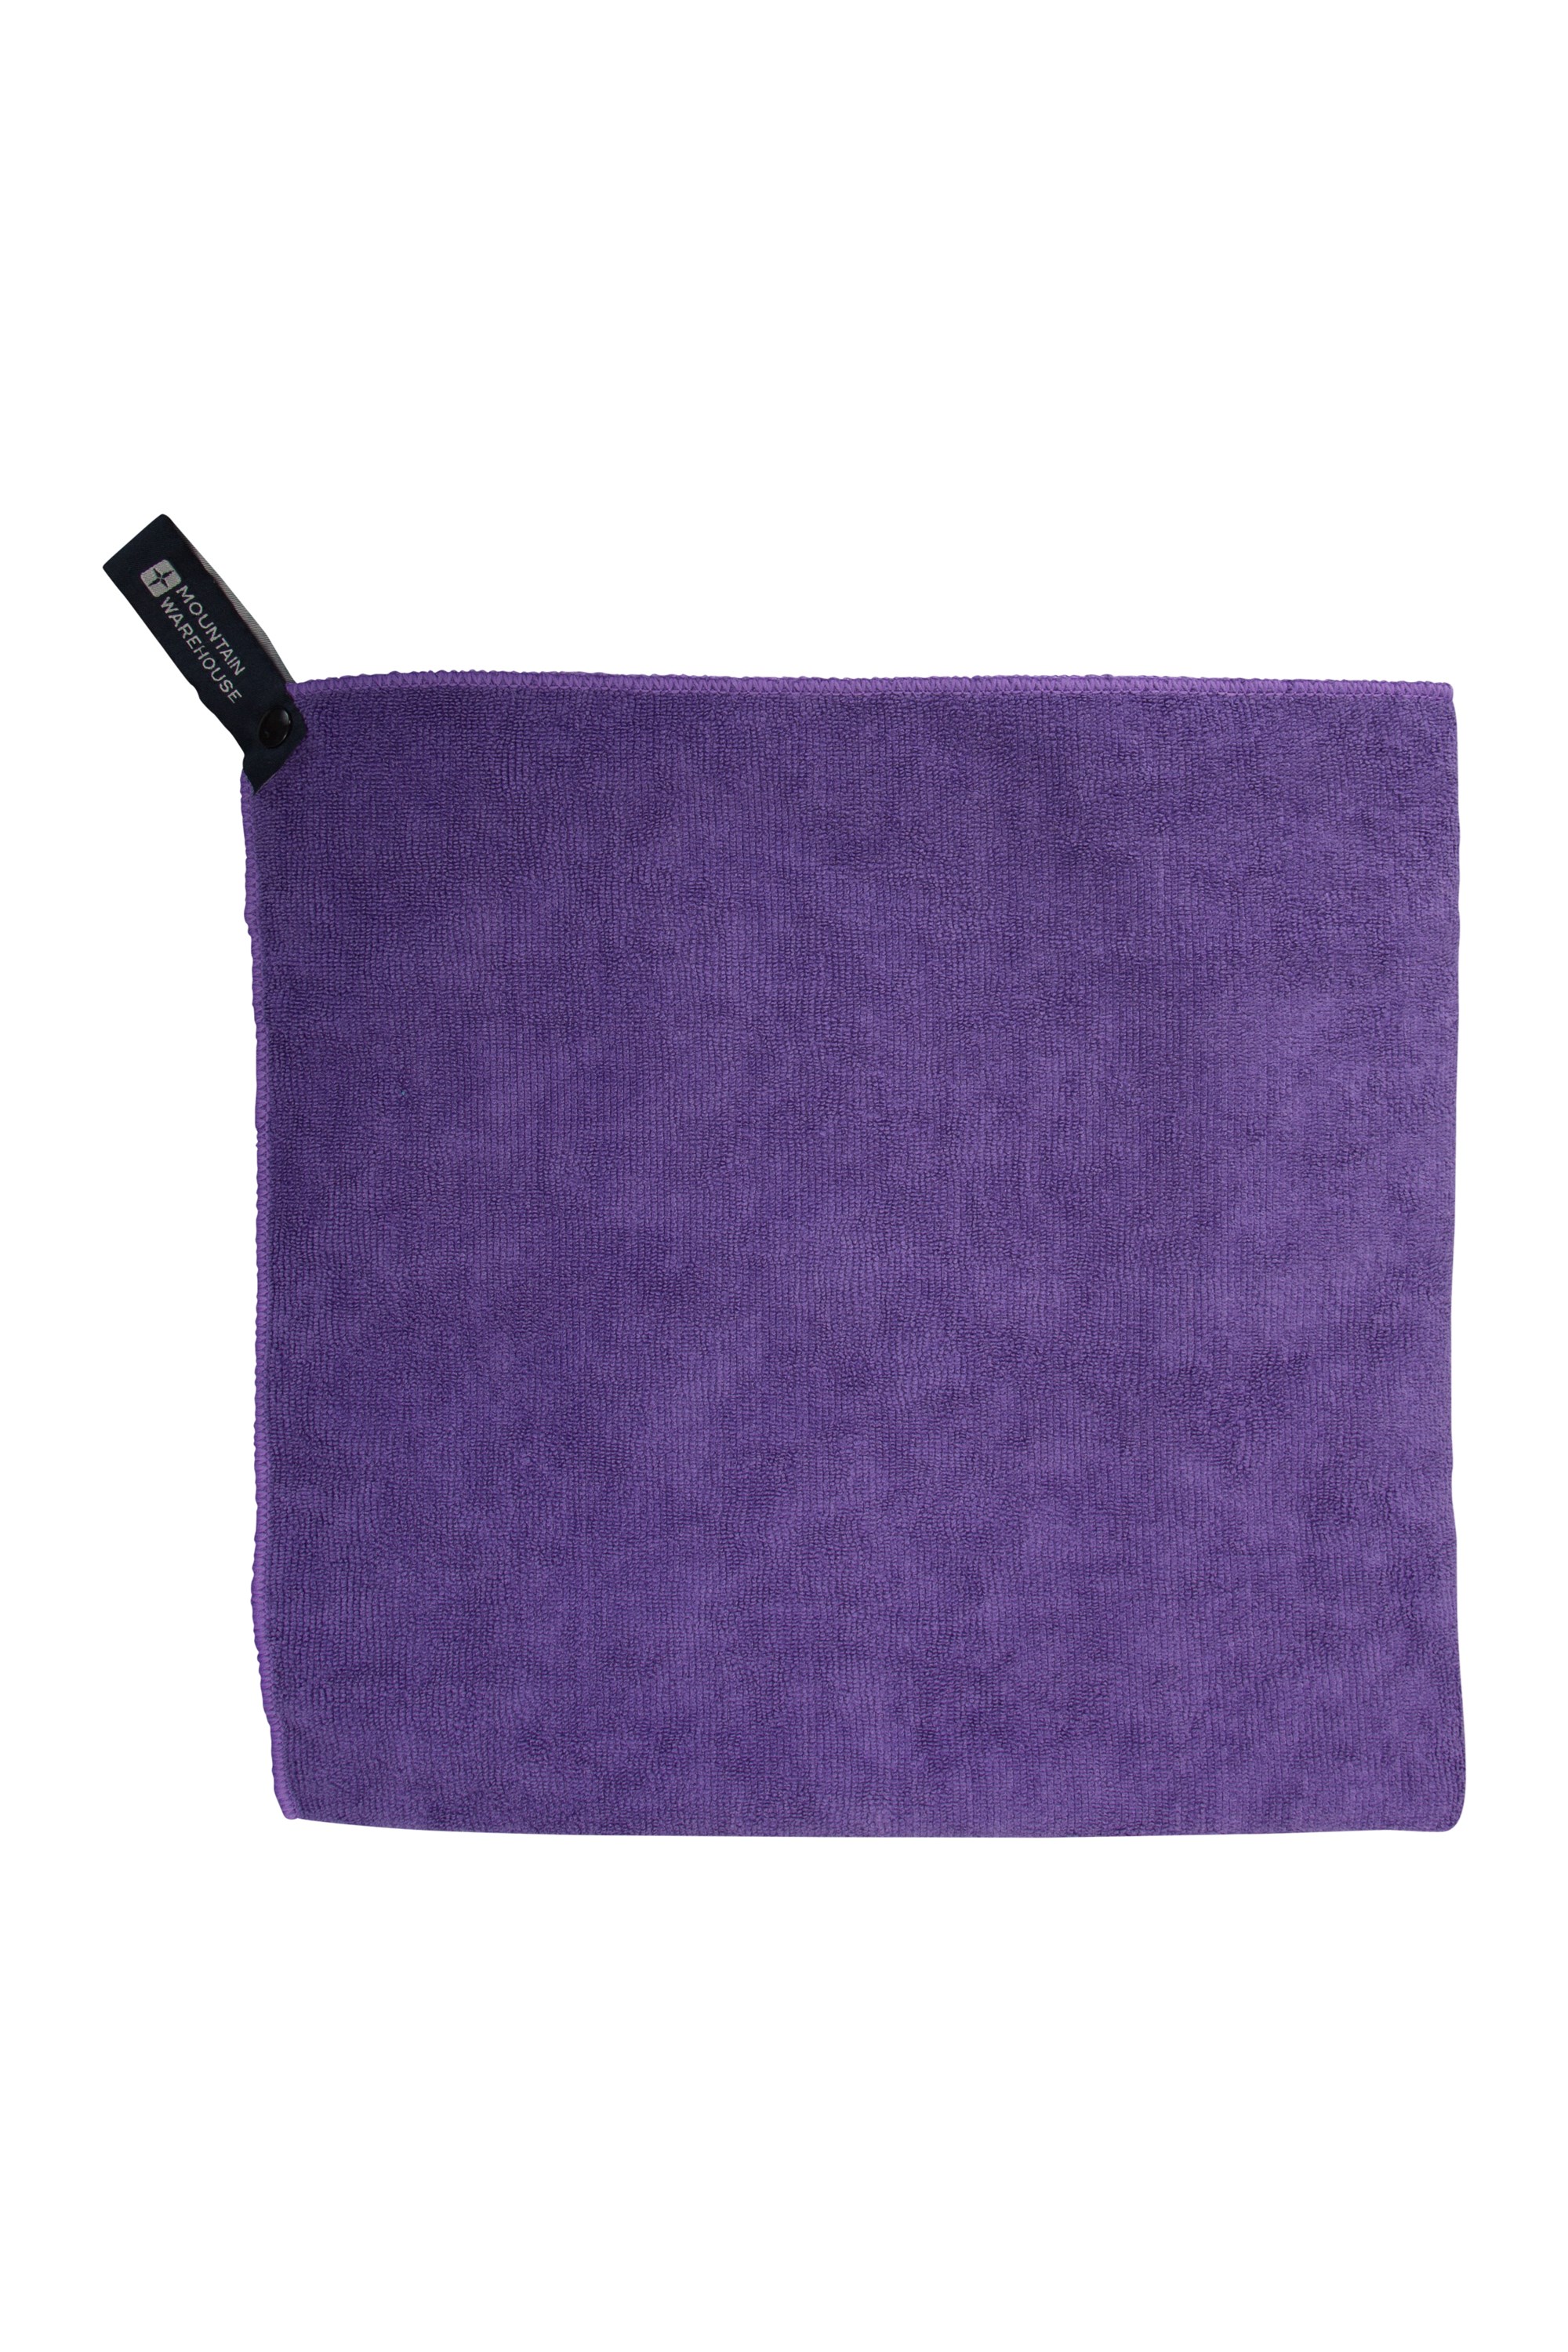 Mountain Warehouse Uni Compact Towel 